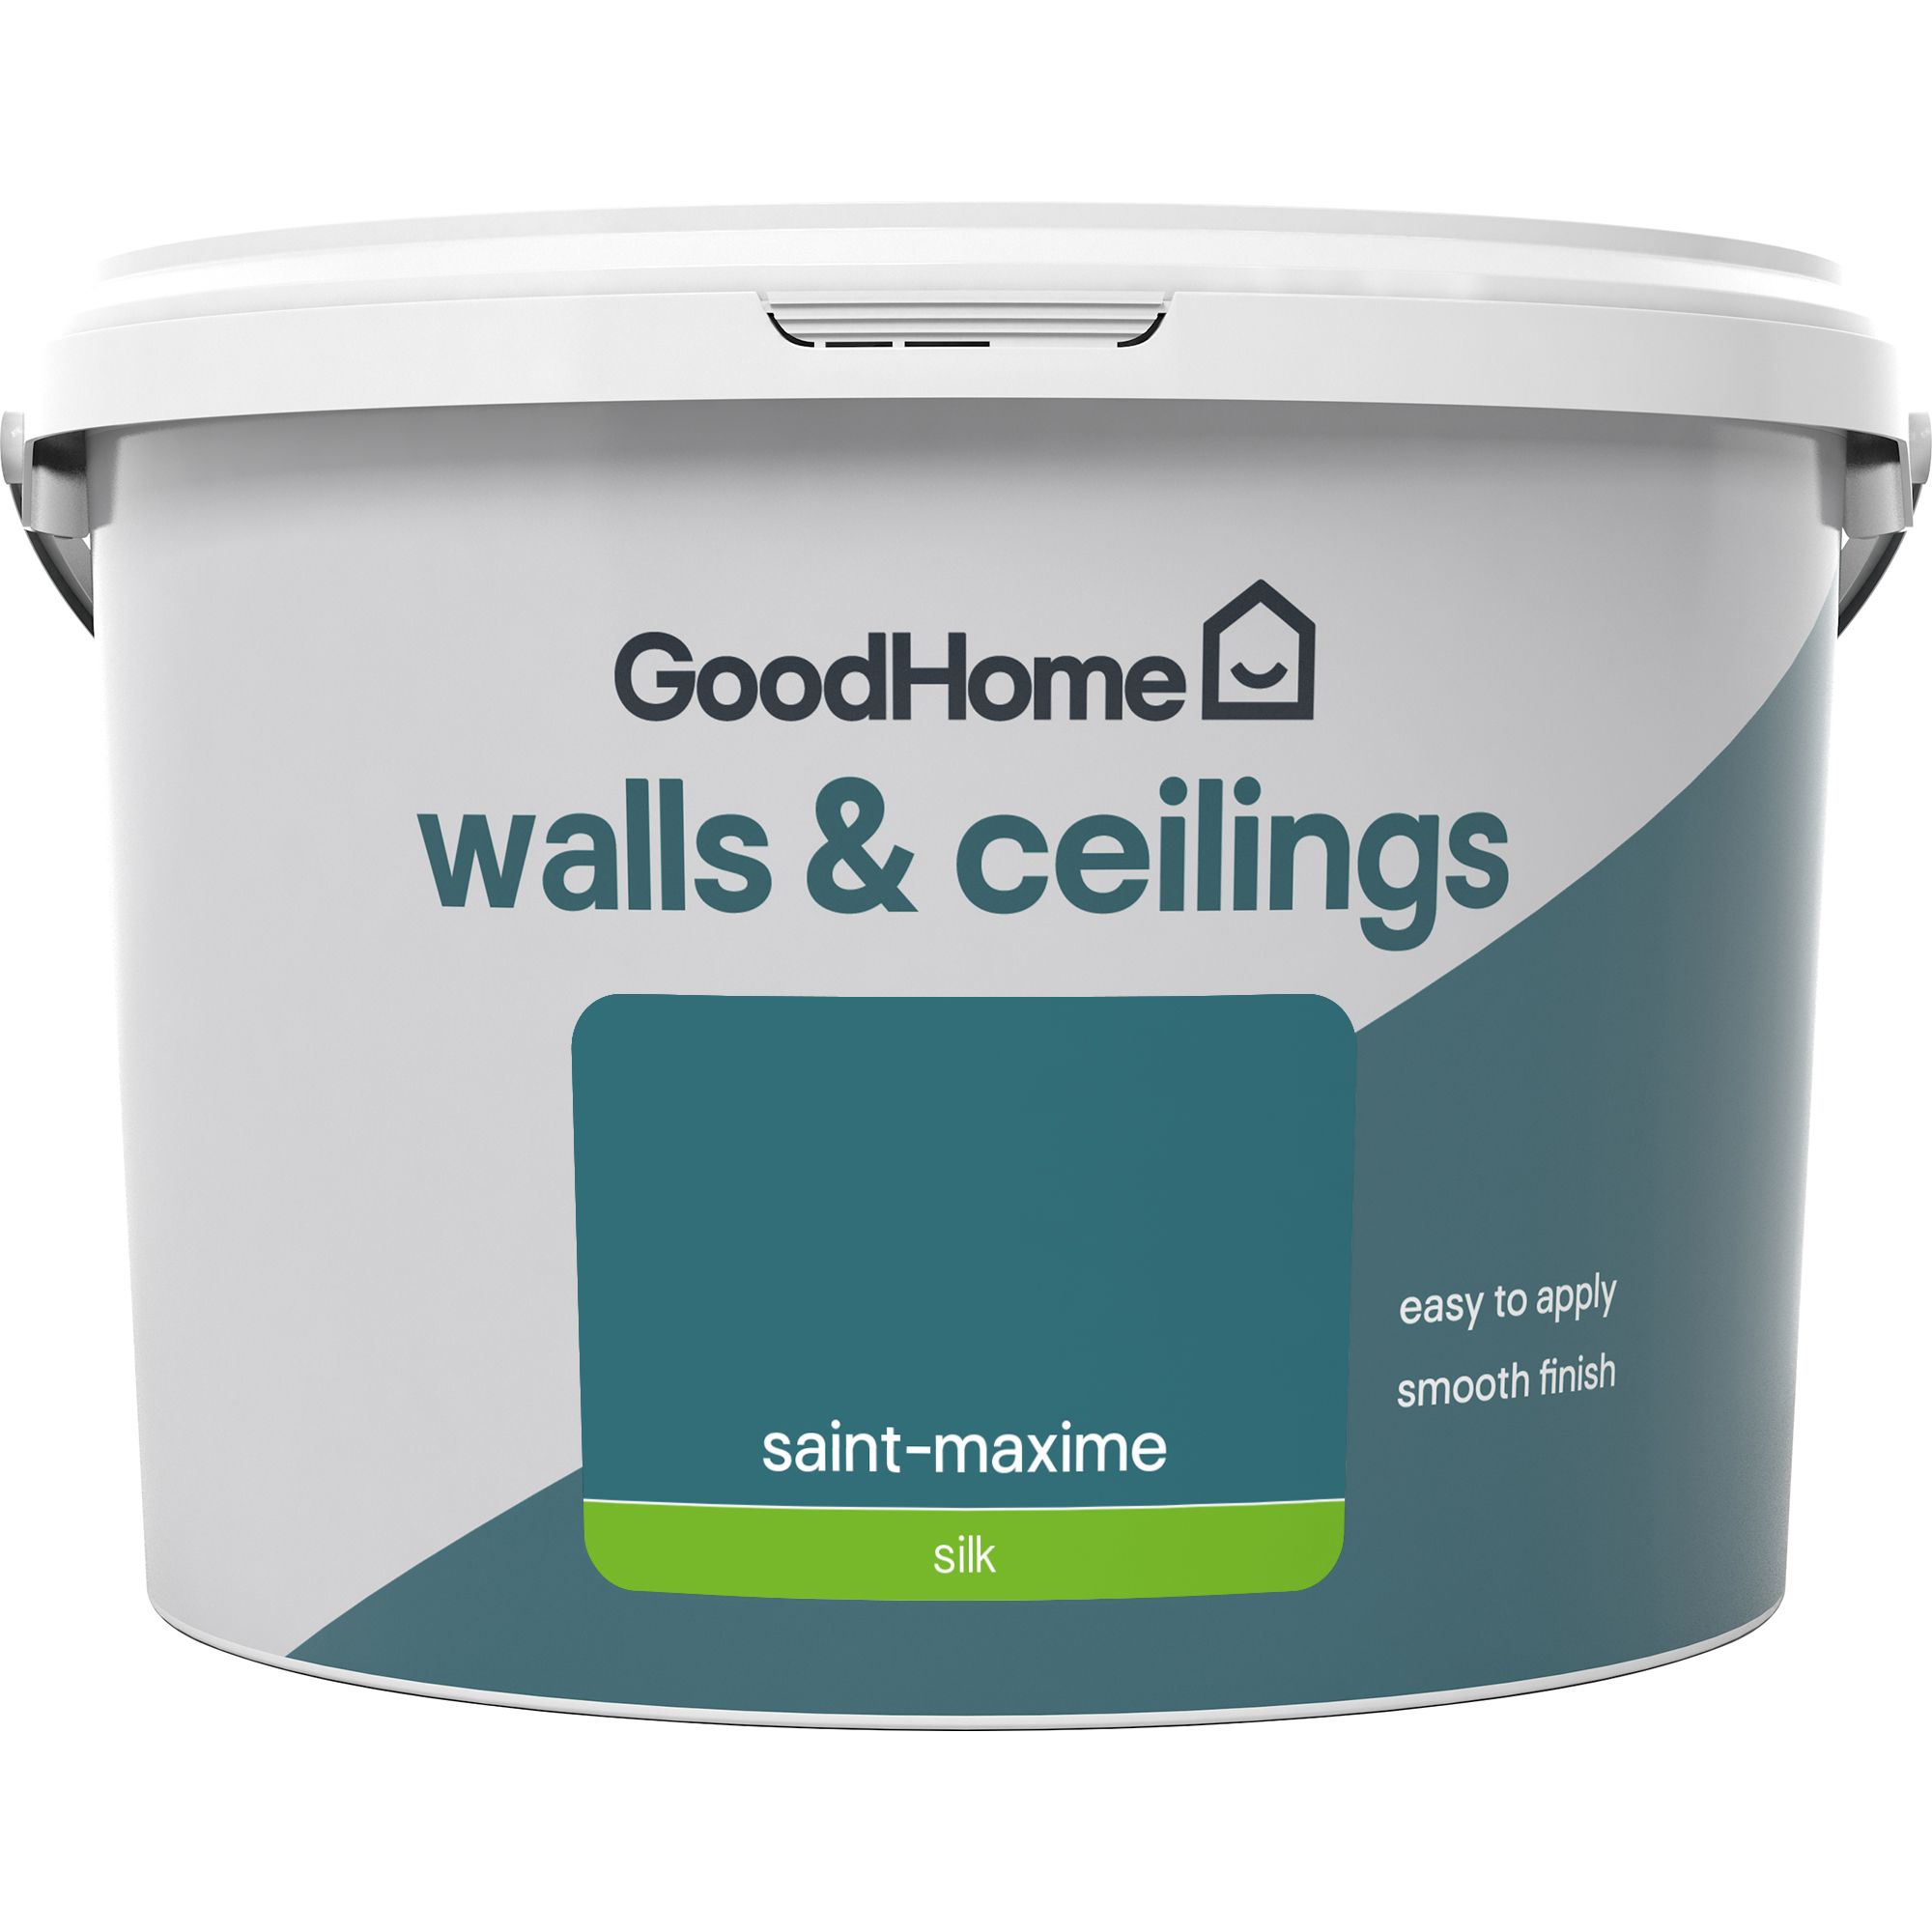 GoodHome Walls & ceilings Saint-maxime Silk Emulsion paint, 2.5L